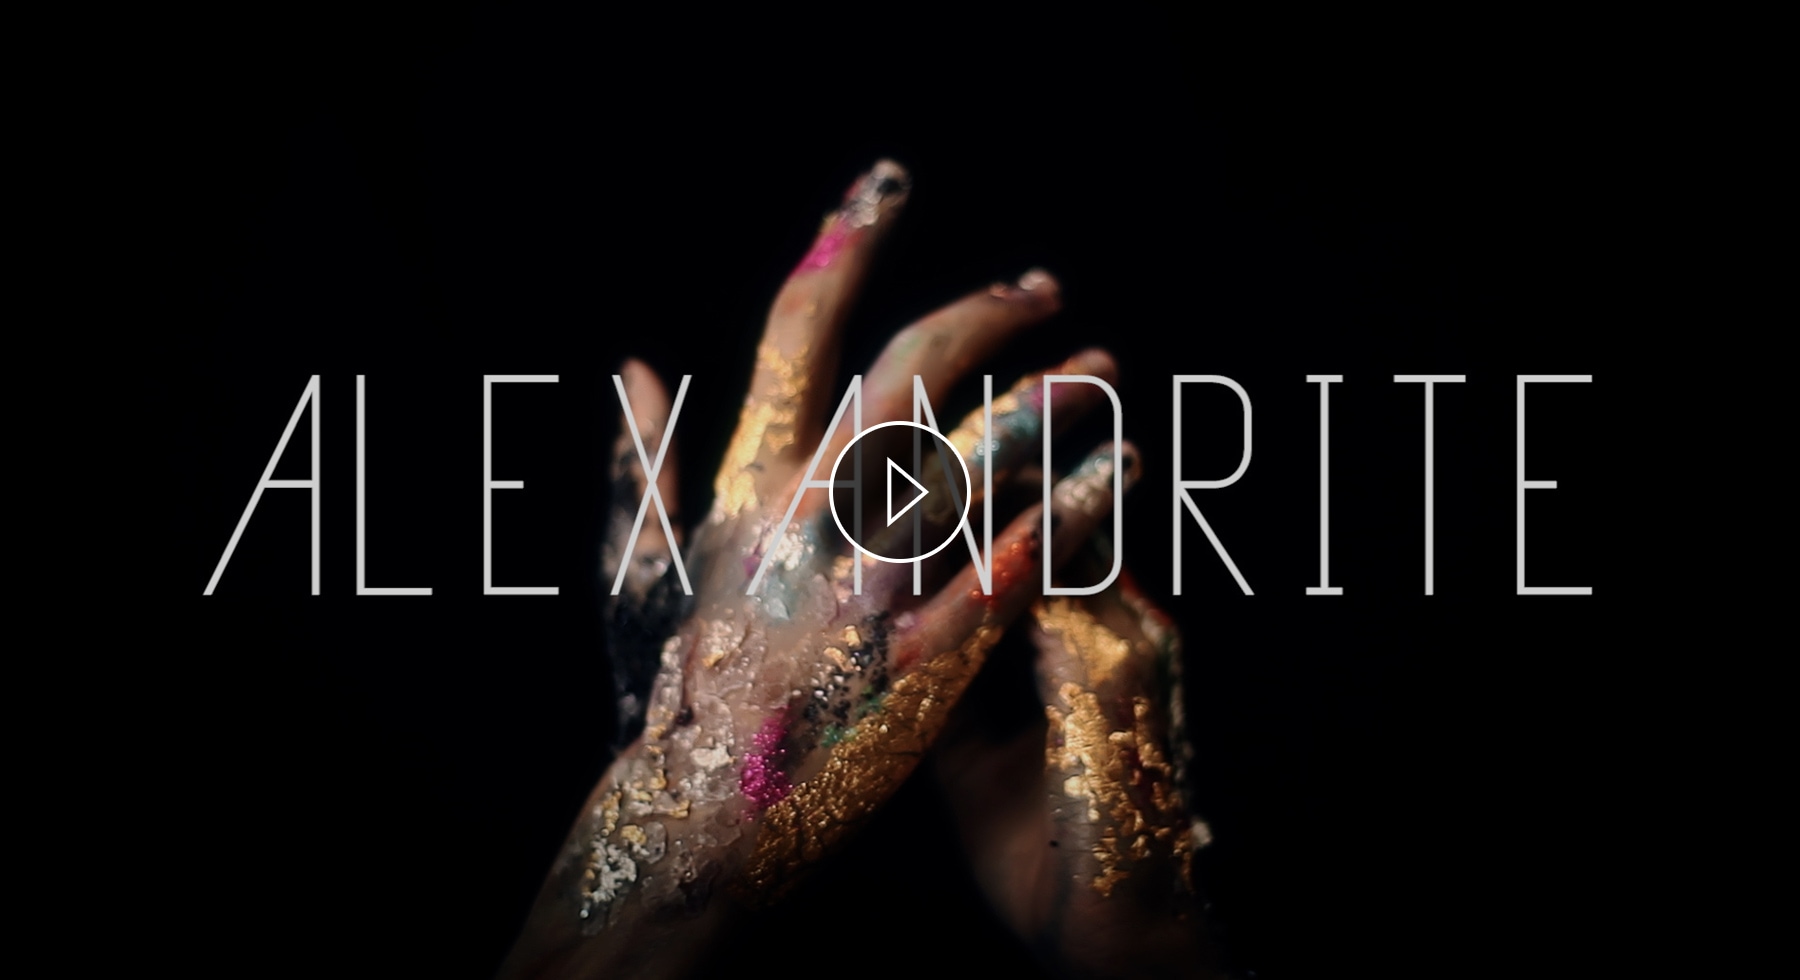 "ALEXANDRITE" Trailer